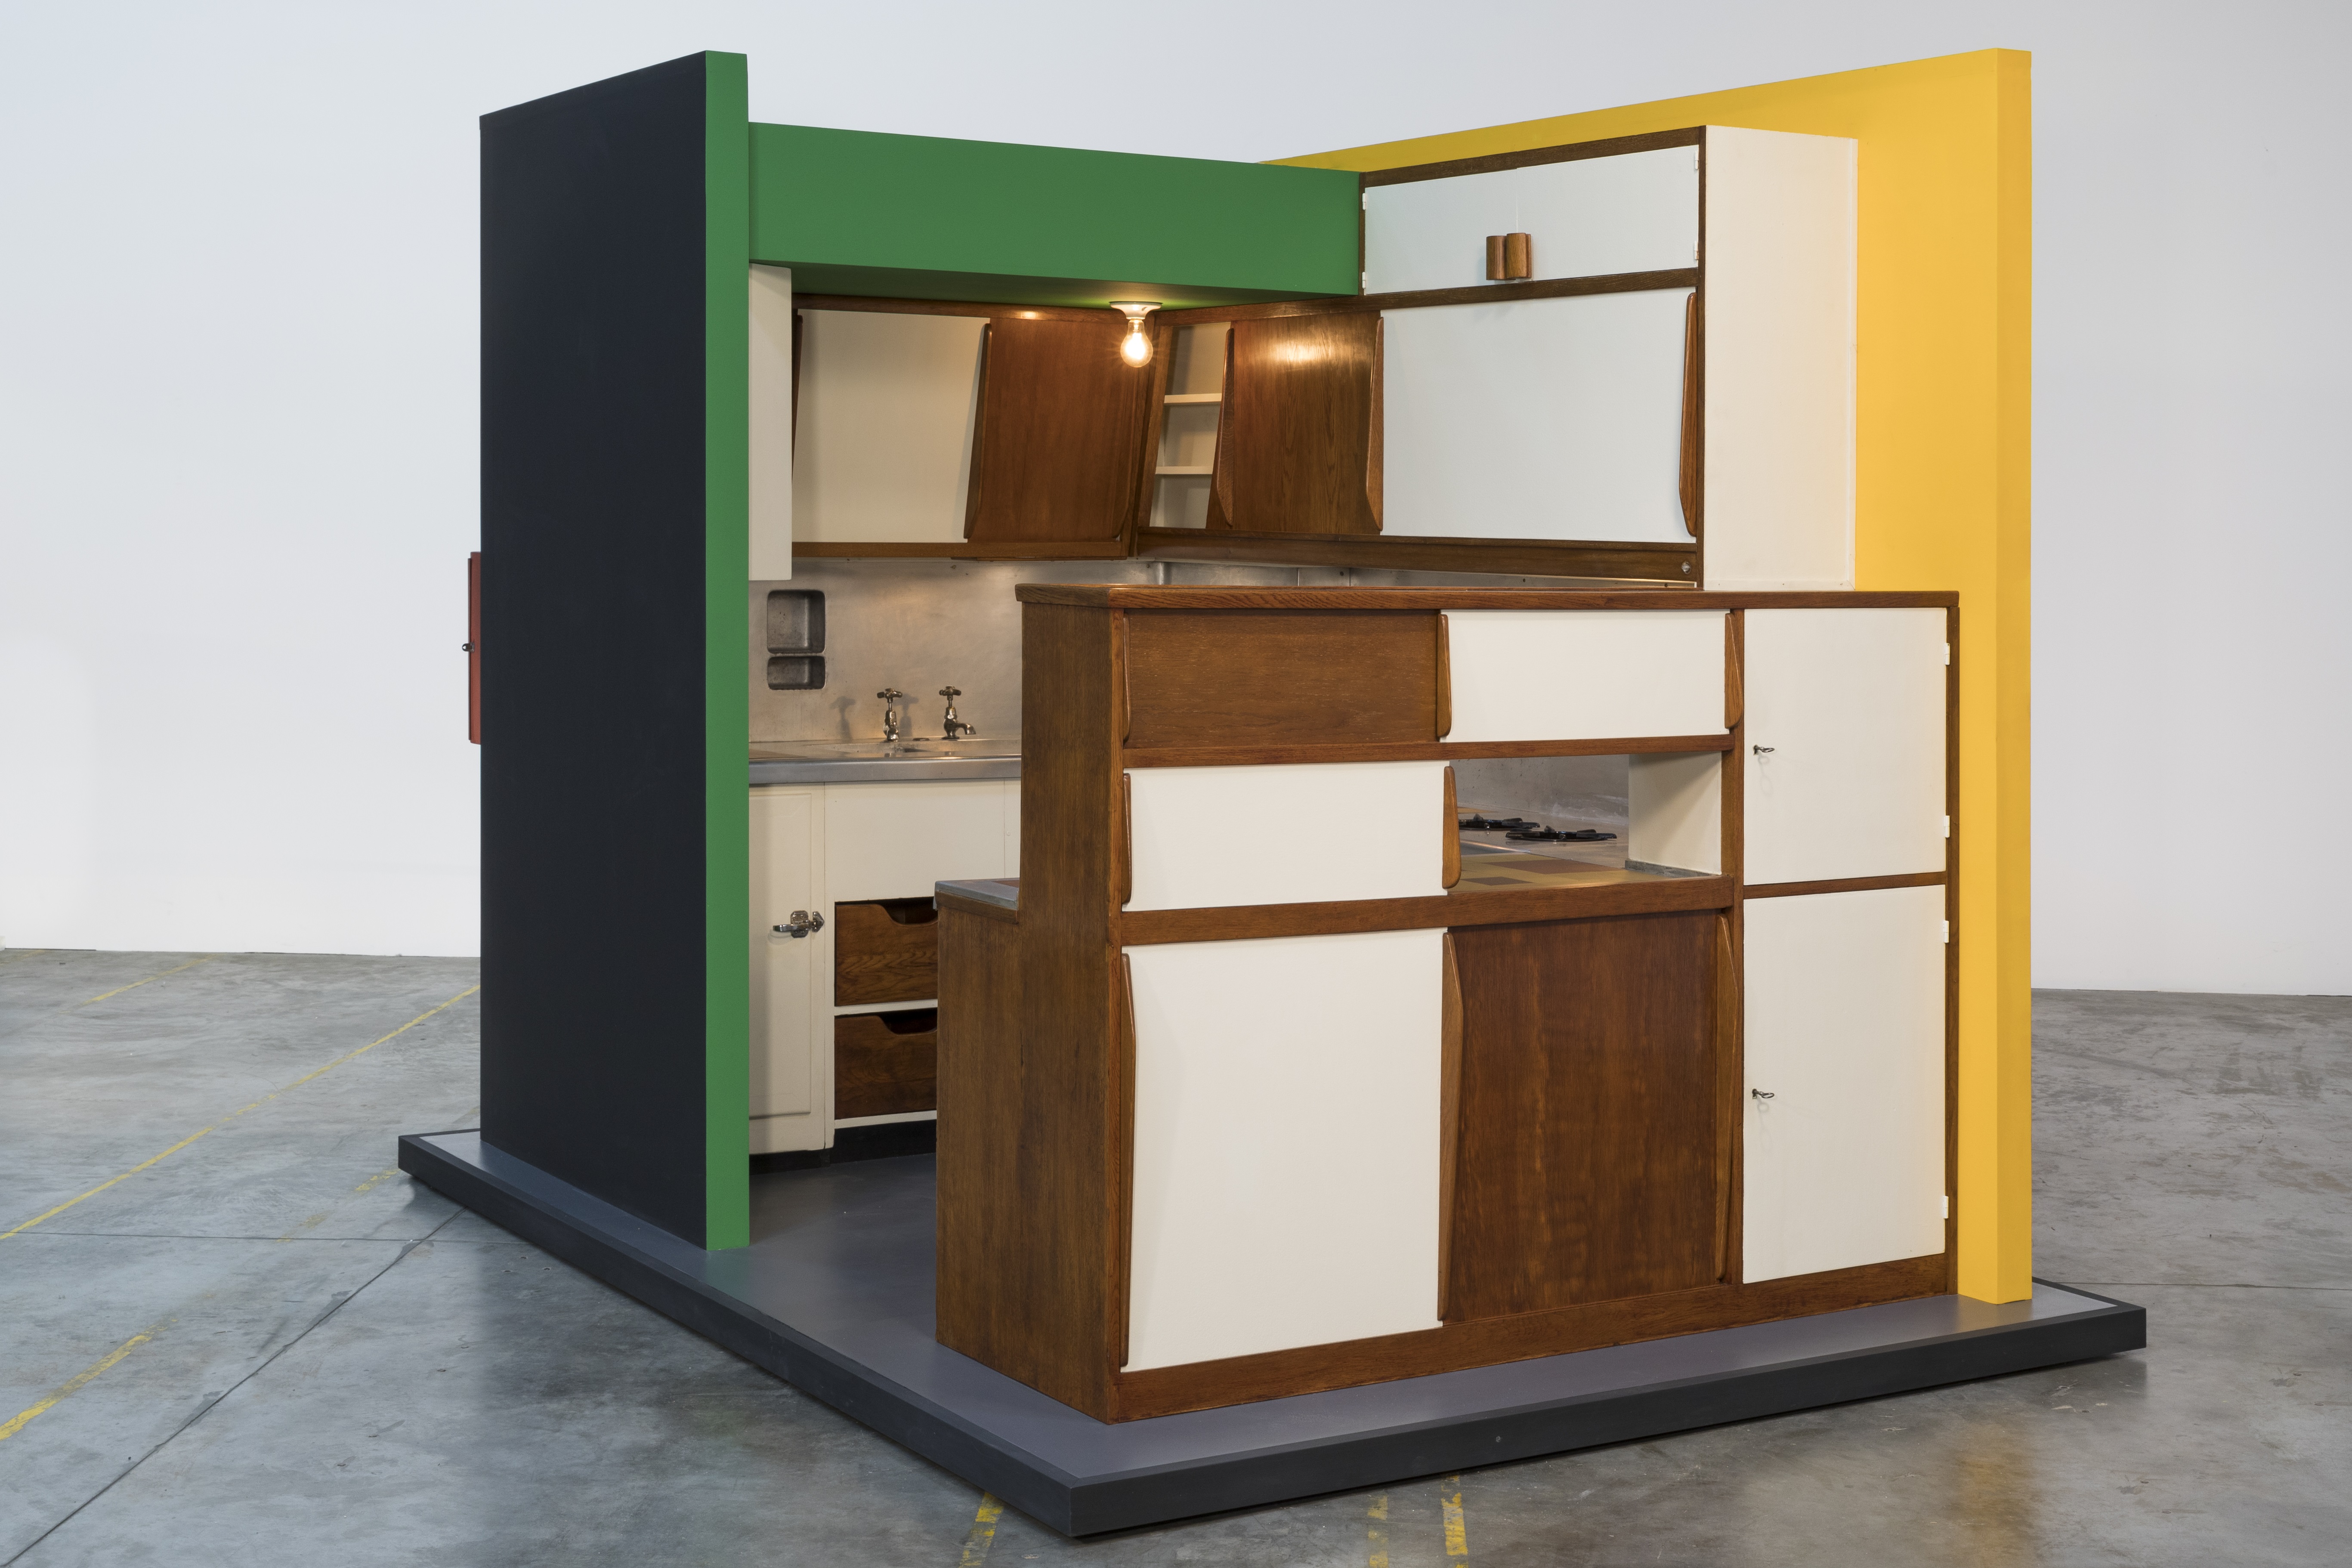 New Acquisition: Charlotte Perriand's Kitchen for an apartment in Le  Corbusier's Unité d'Habitation